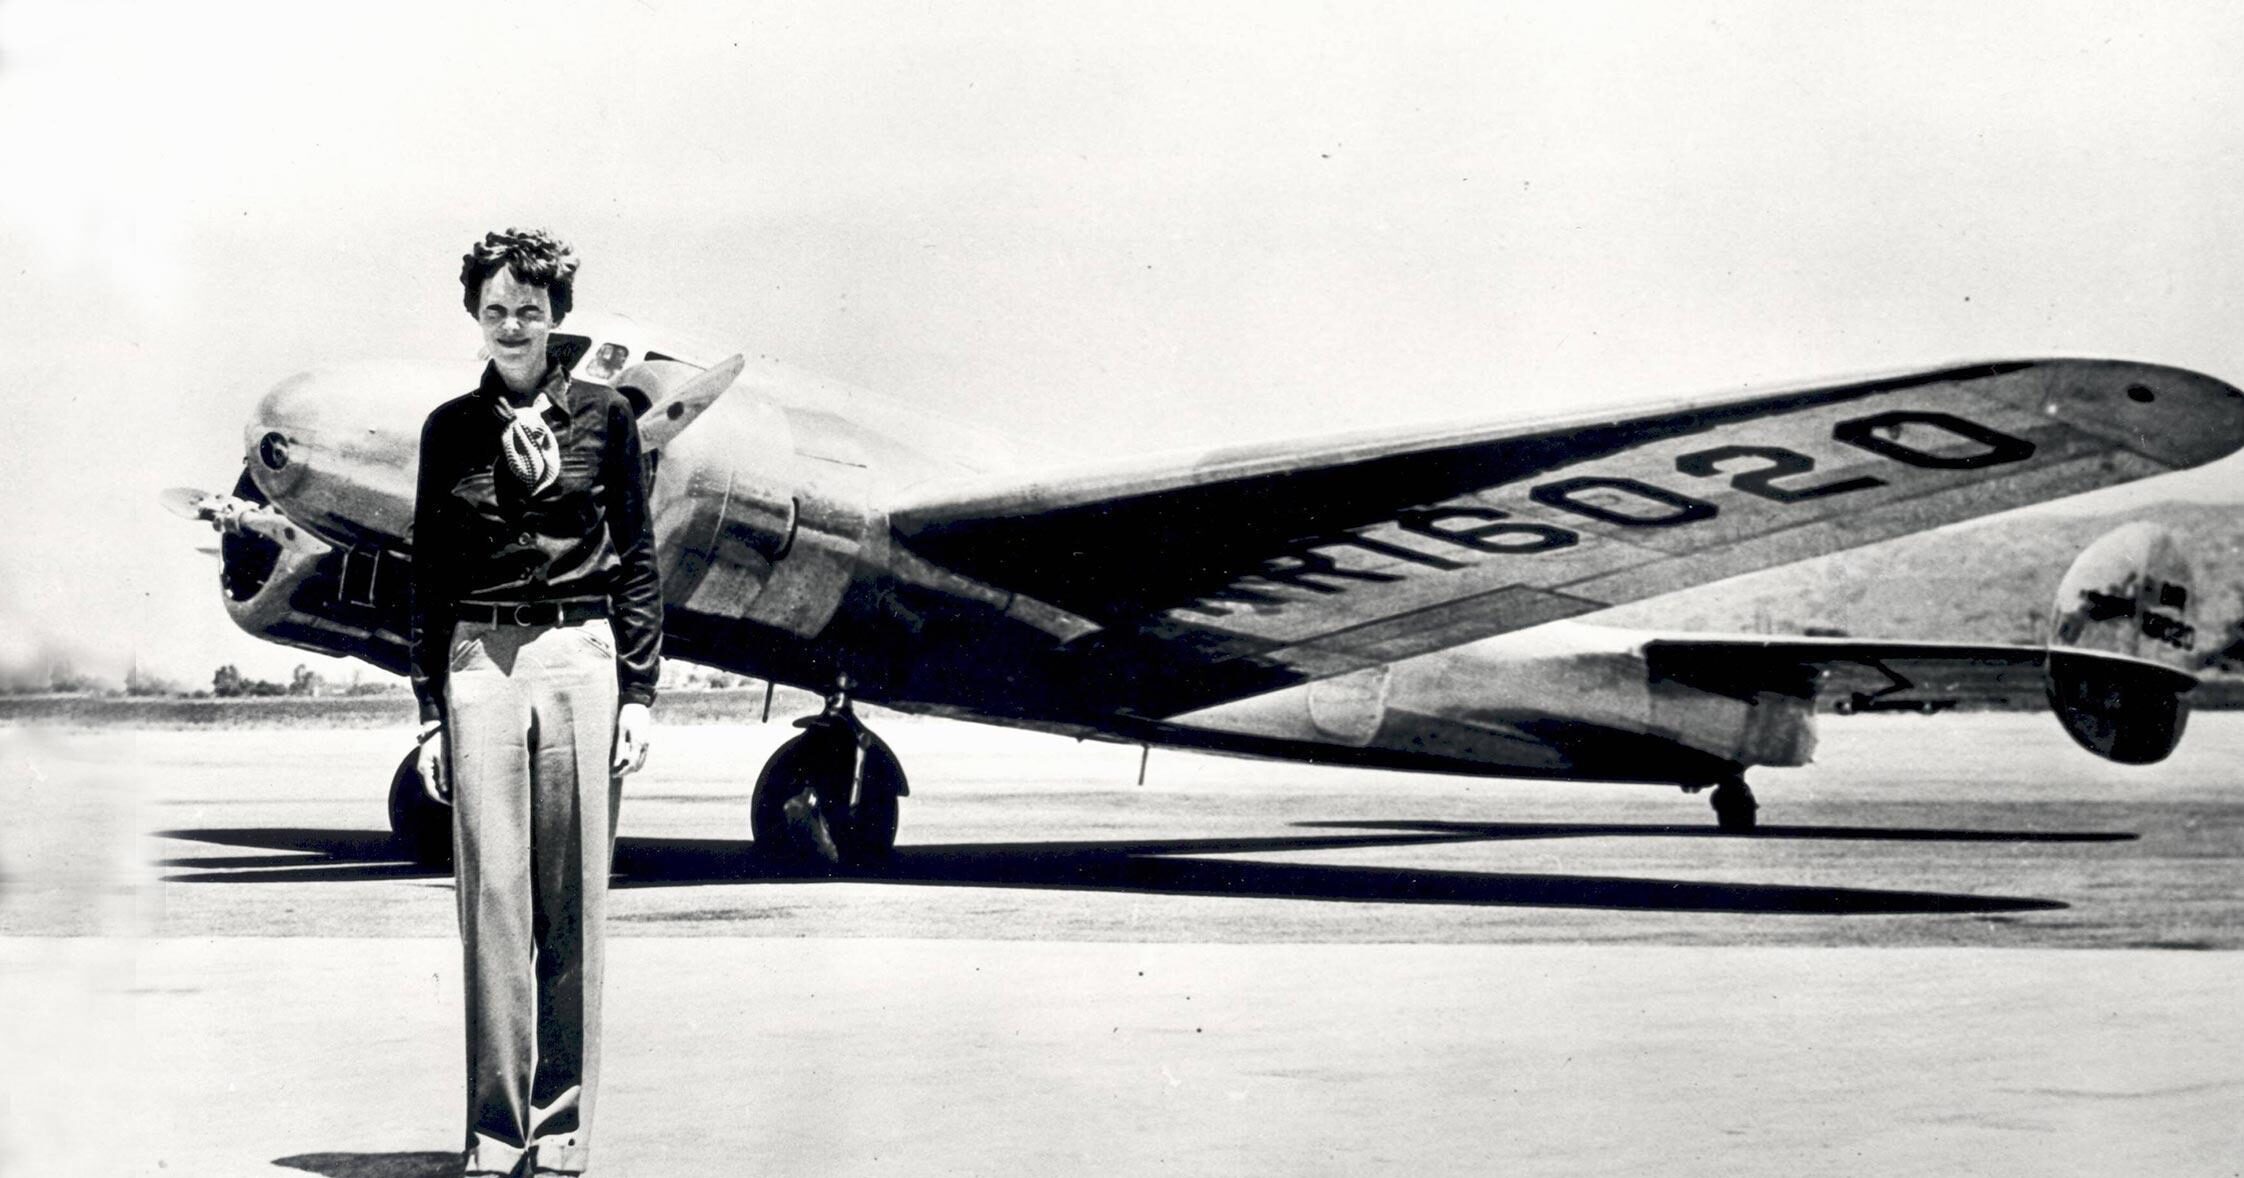 Amelia Earhart’s Historic Solo Transatlantic Flight: 90th Anniversary